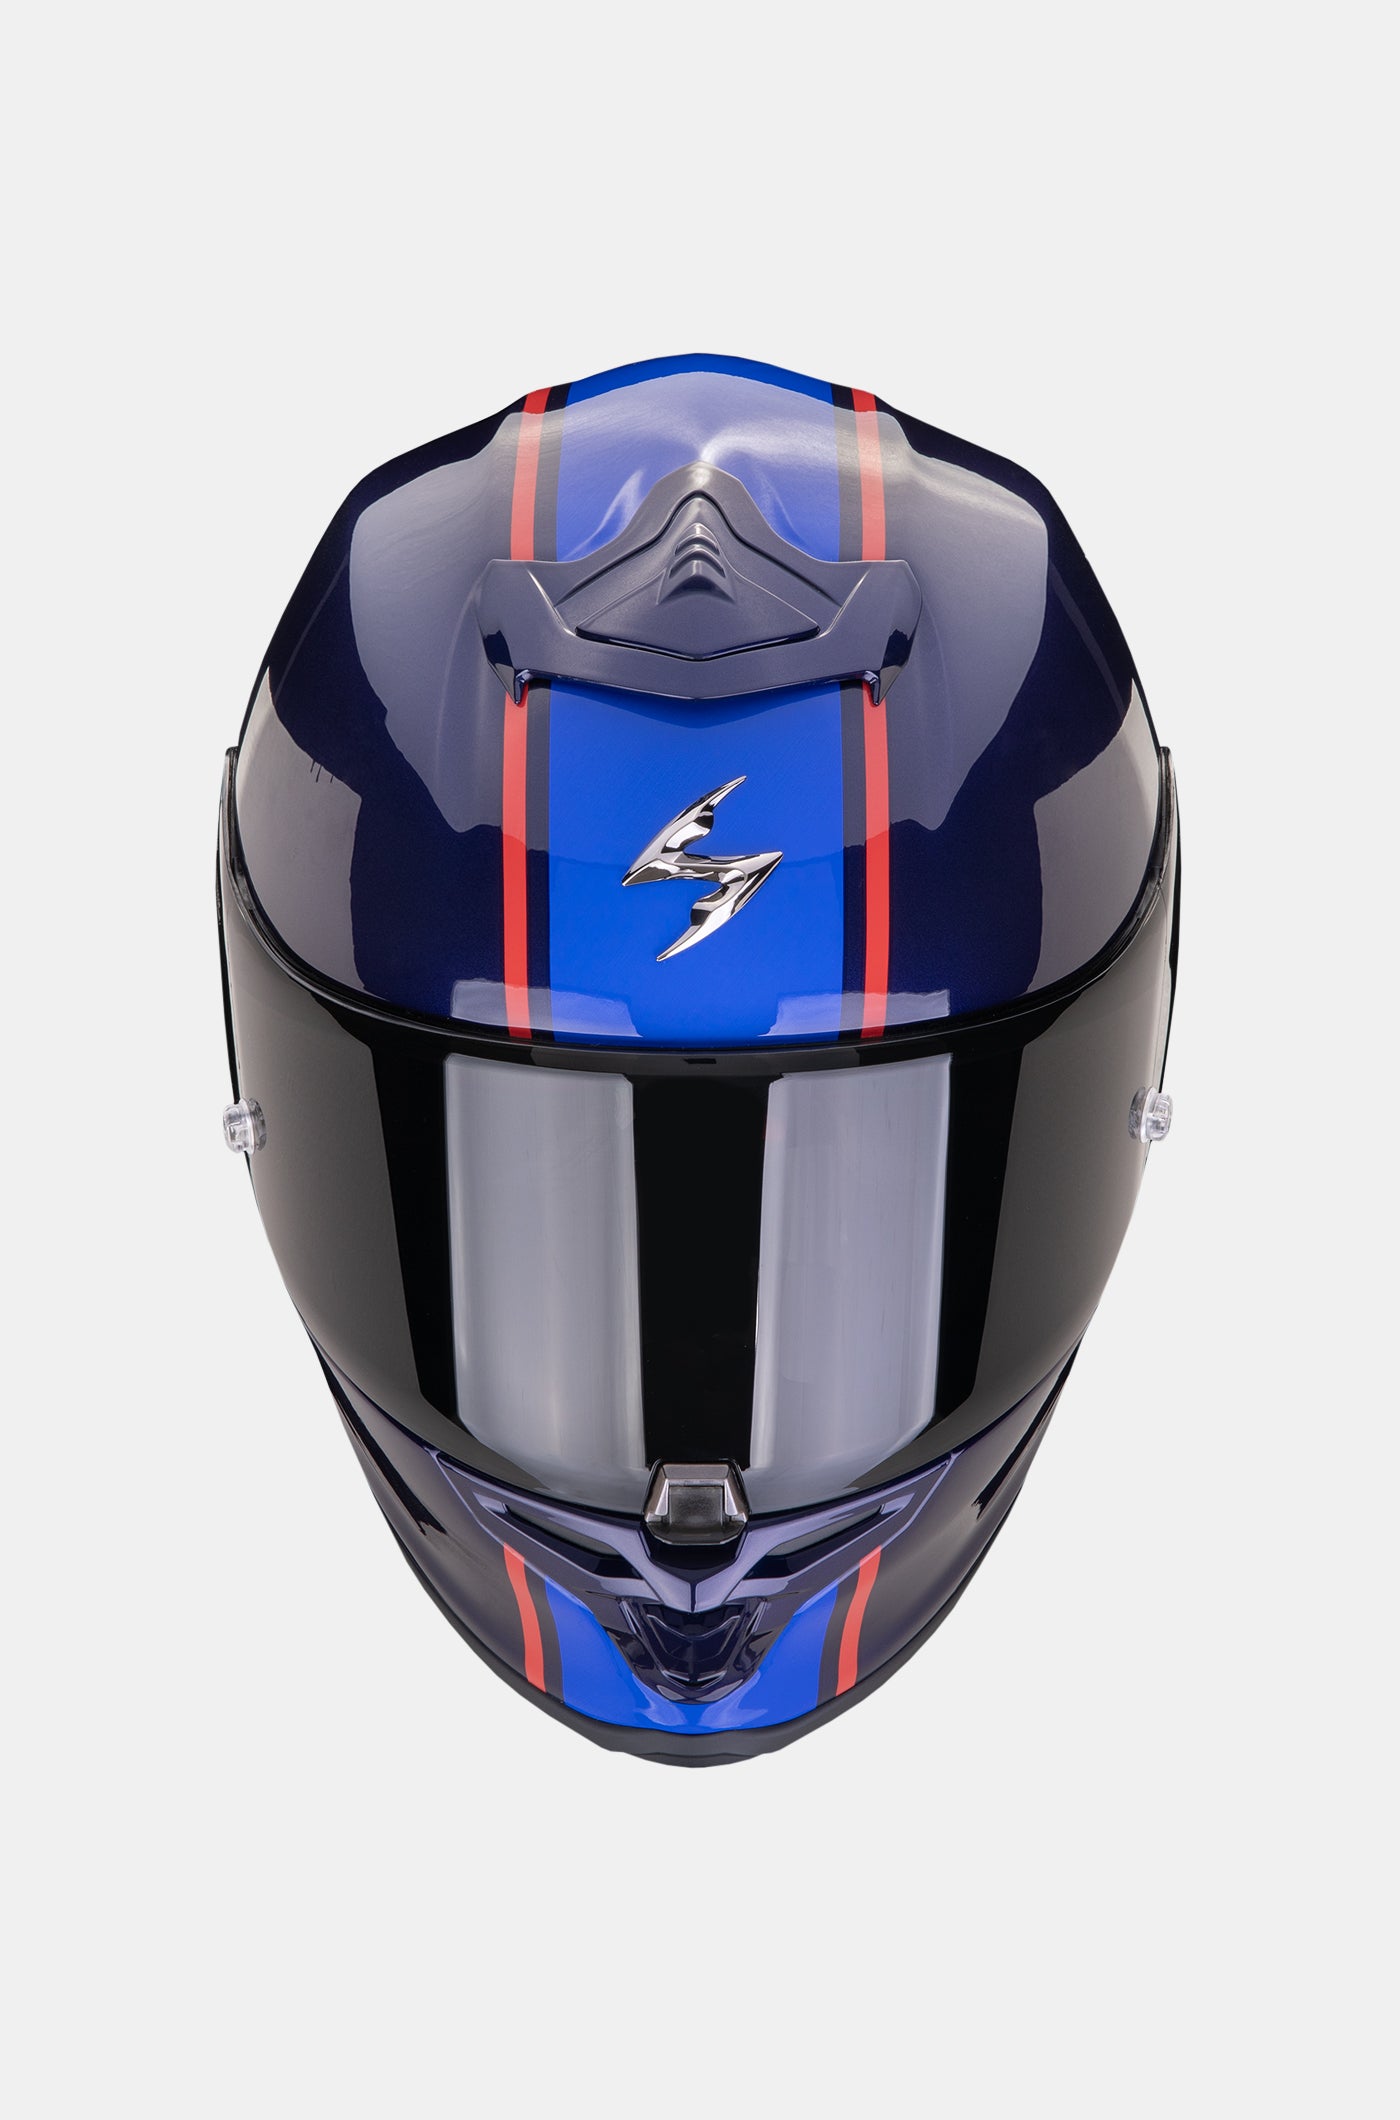 Scorpion-FC Barcelona Motorbike helmet EXO-R1 EVO AIR